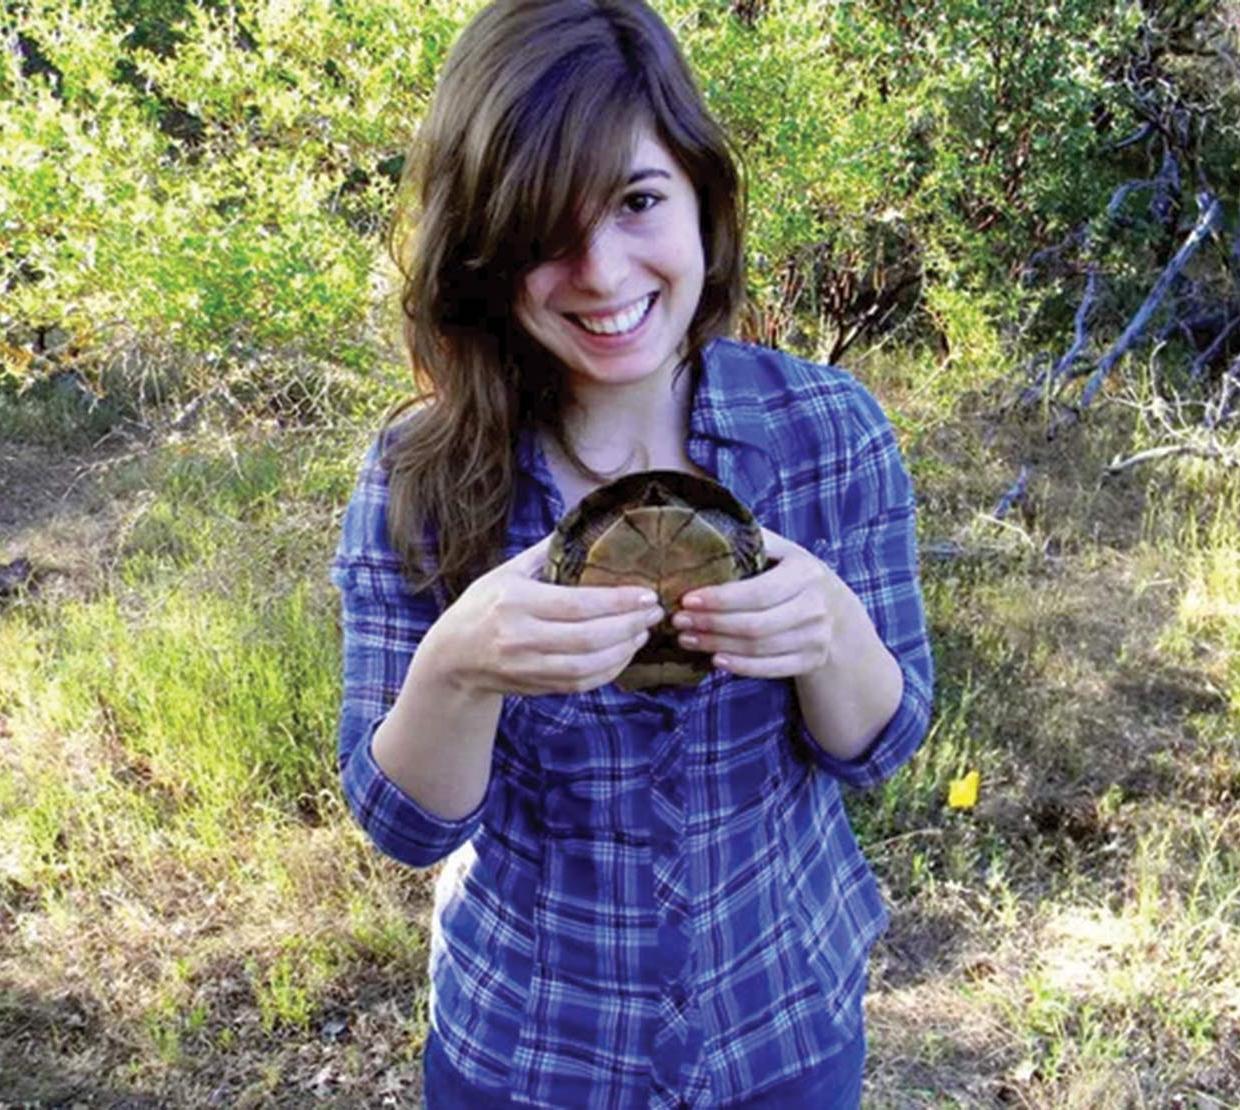 Natalie Hambalek holding tortoise in field